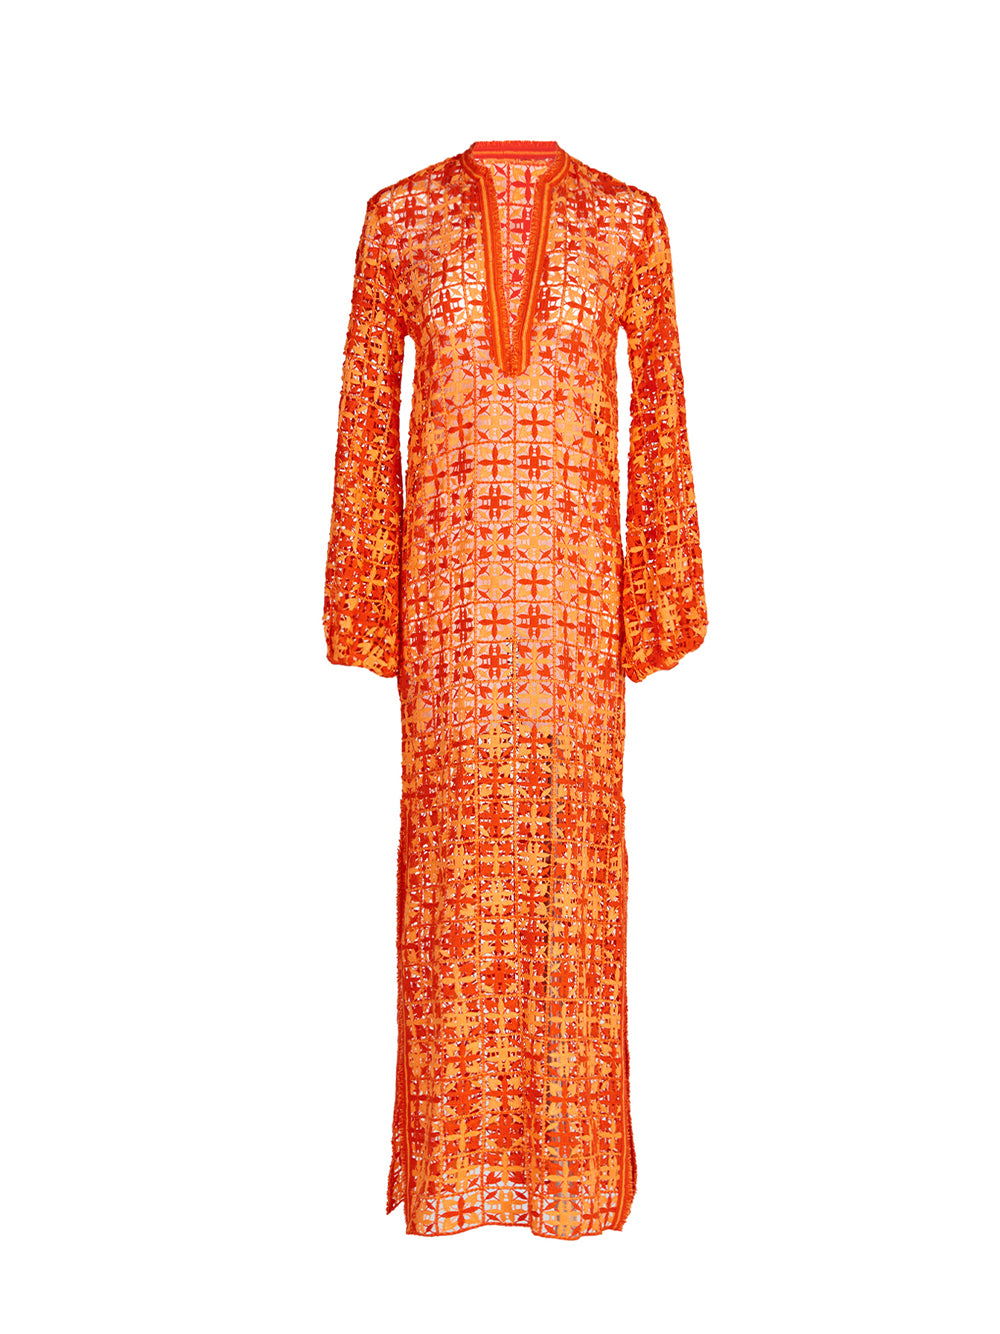 Thais Tunic (Red Orange Crochet)